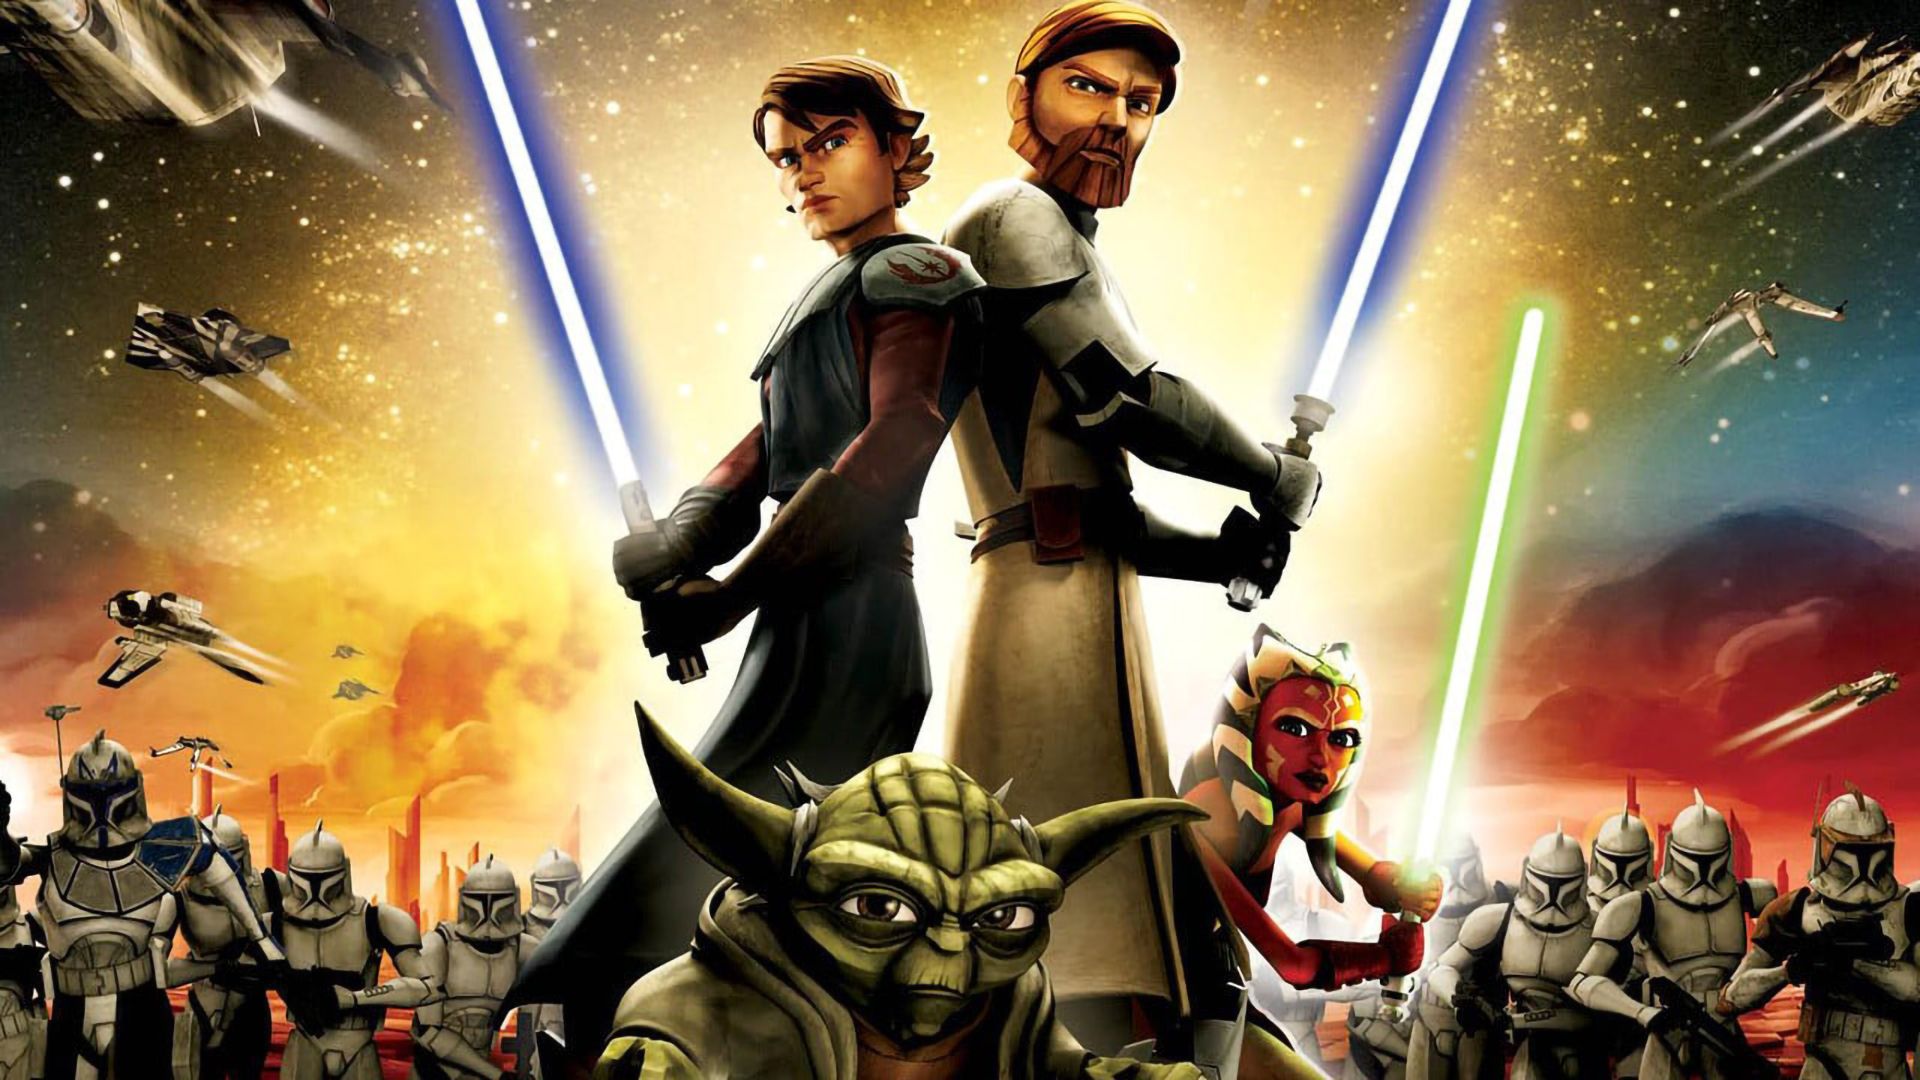 Star Wars The Clone Wars Season 6 Wallpaper, HD TV Series 4K Wallpaper, Image, Photo and Background